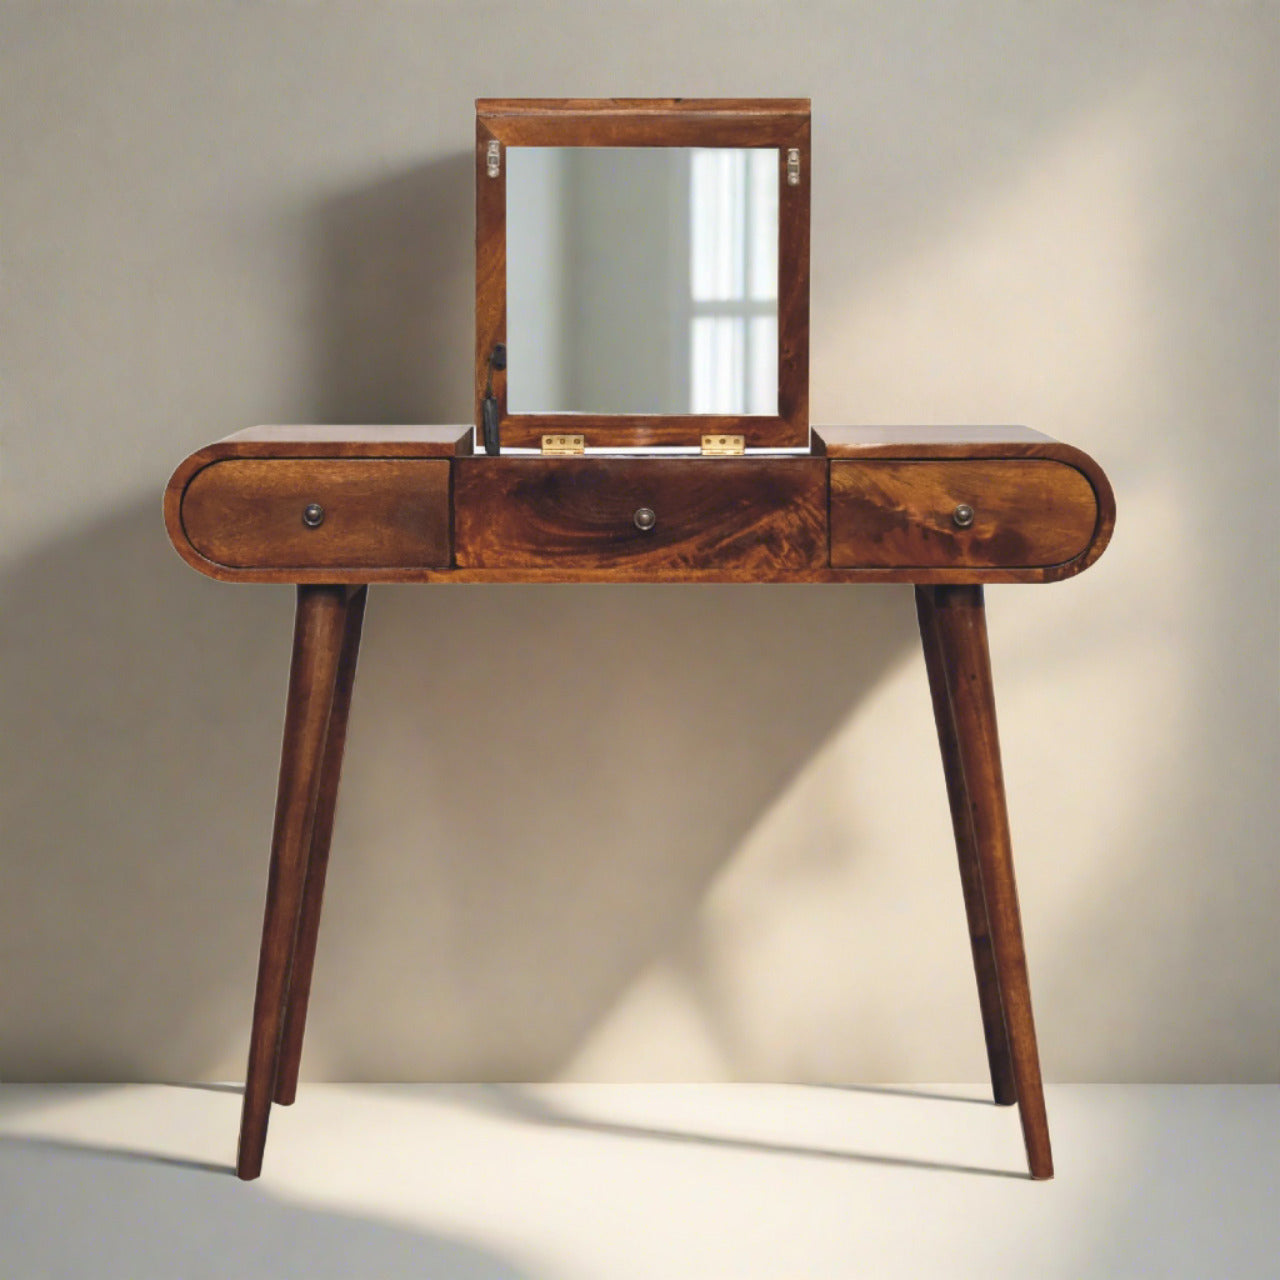 Newton handmade solid wood 3 drawer dressing table with foldable mirror in deep chestnut finish | malltandplane.com